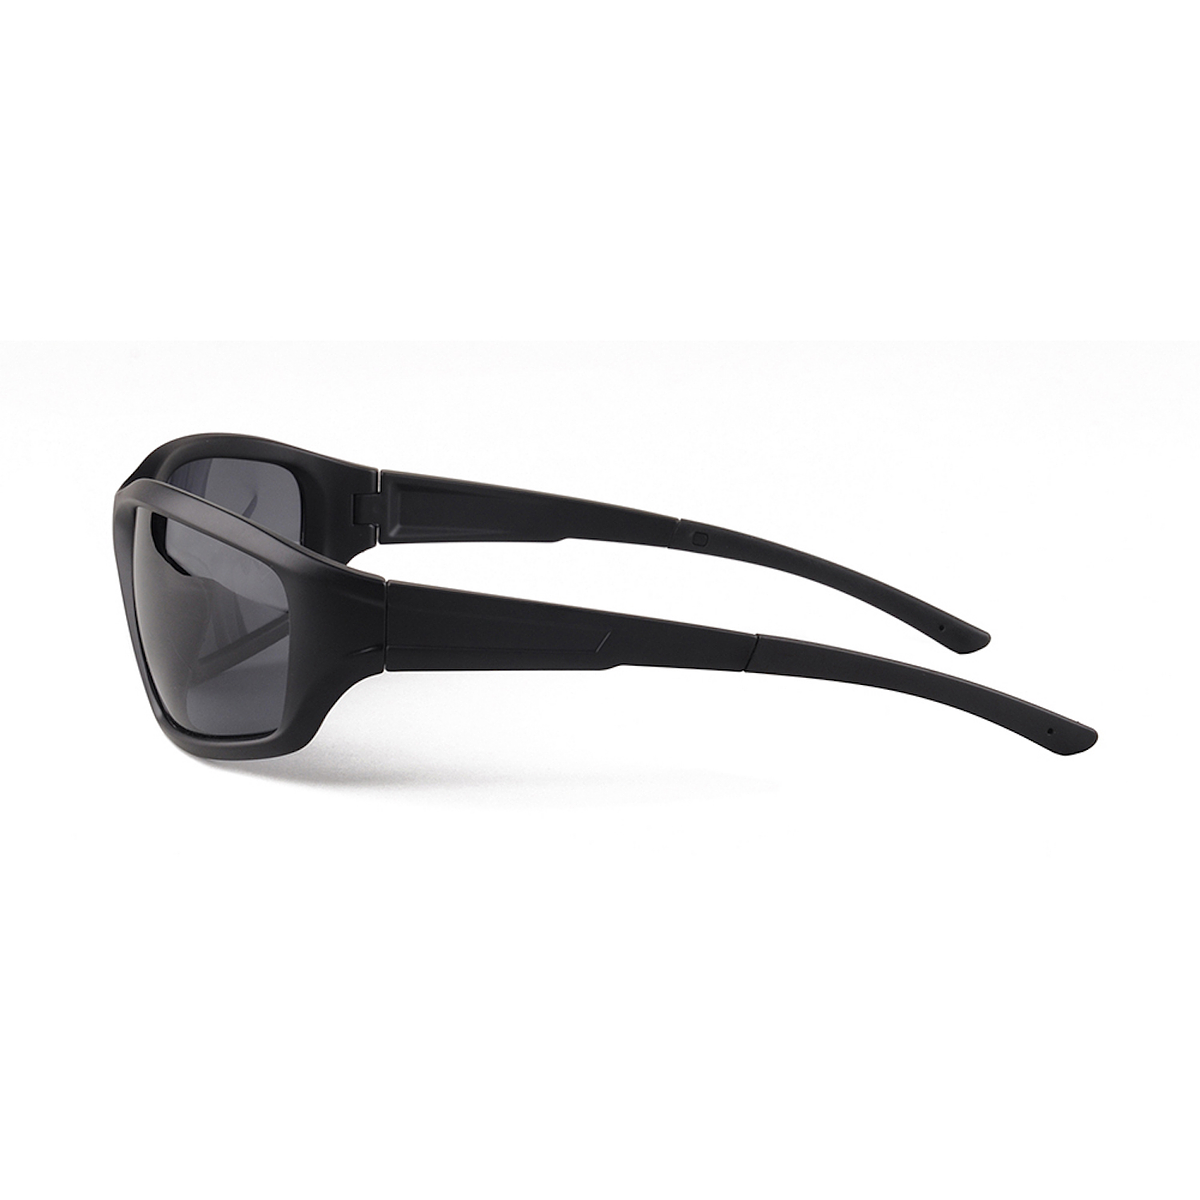 Skevic Gafas de Sol Hombre Mujer Polarizadas TR90 - Gafas Running